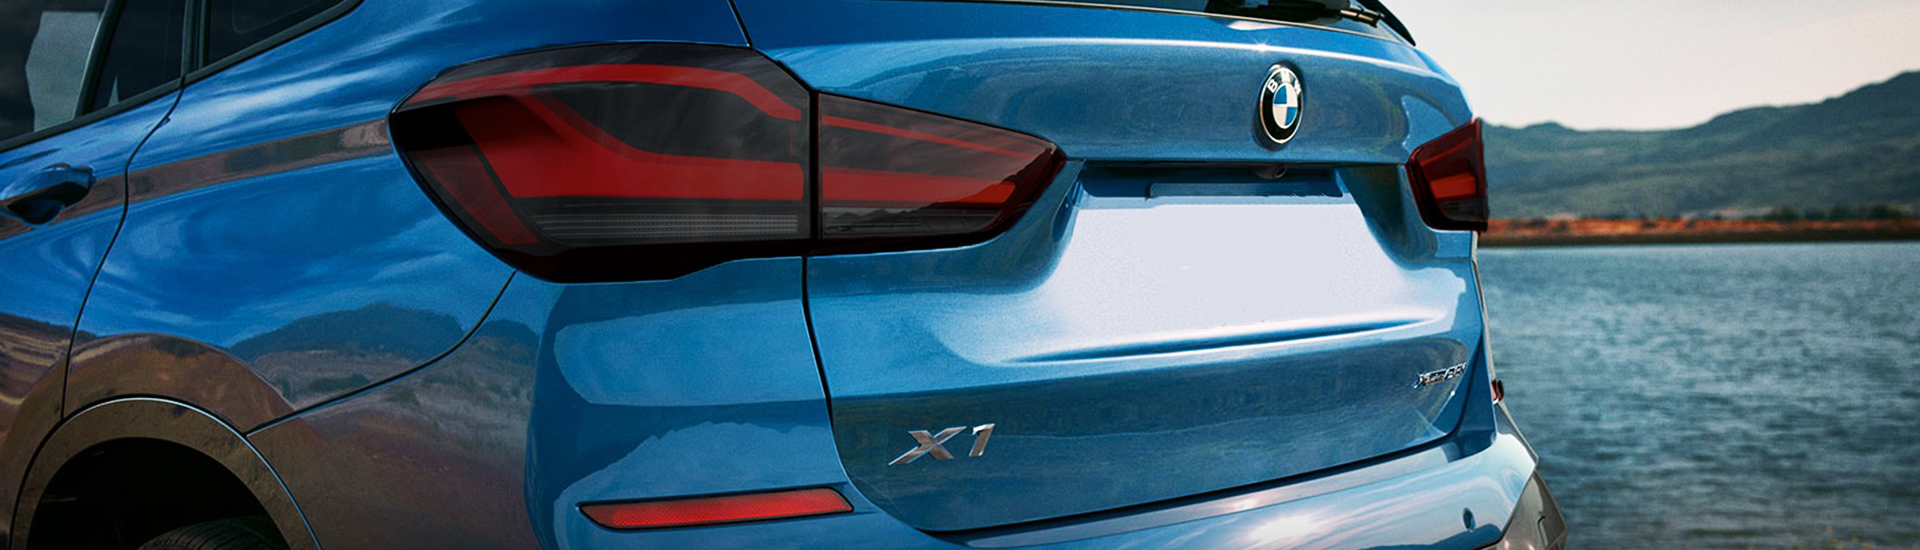 BMW X1 Tail Light Tint Covers